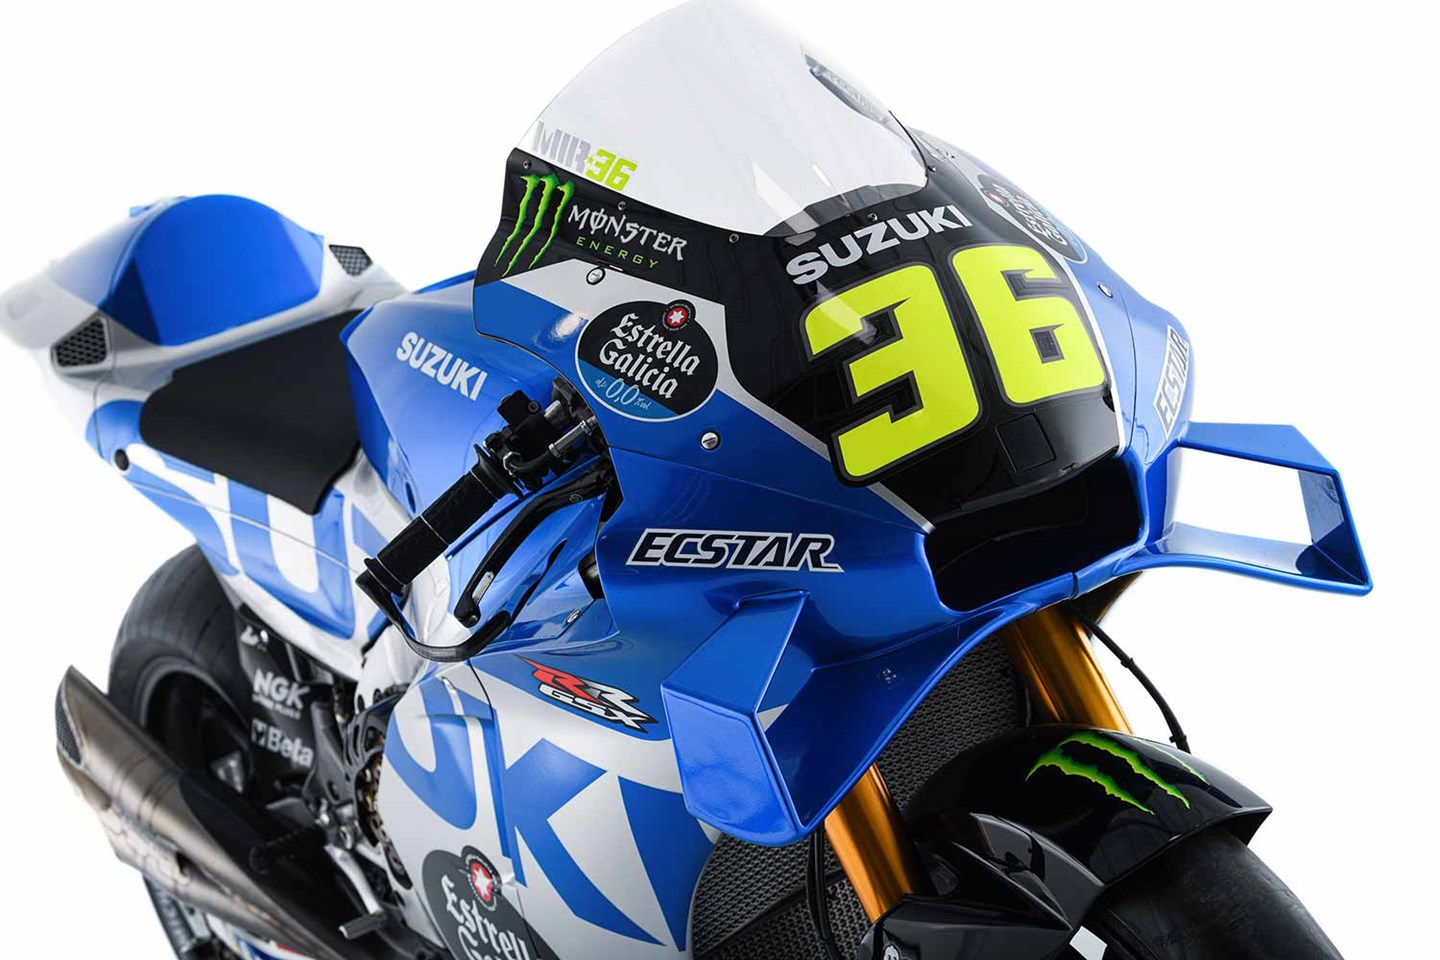 MotoGP: Suzuki reveal 2022 livery at Sepang